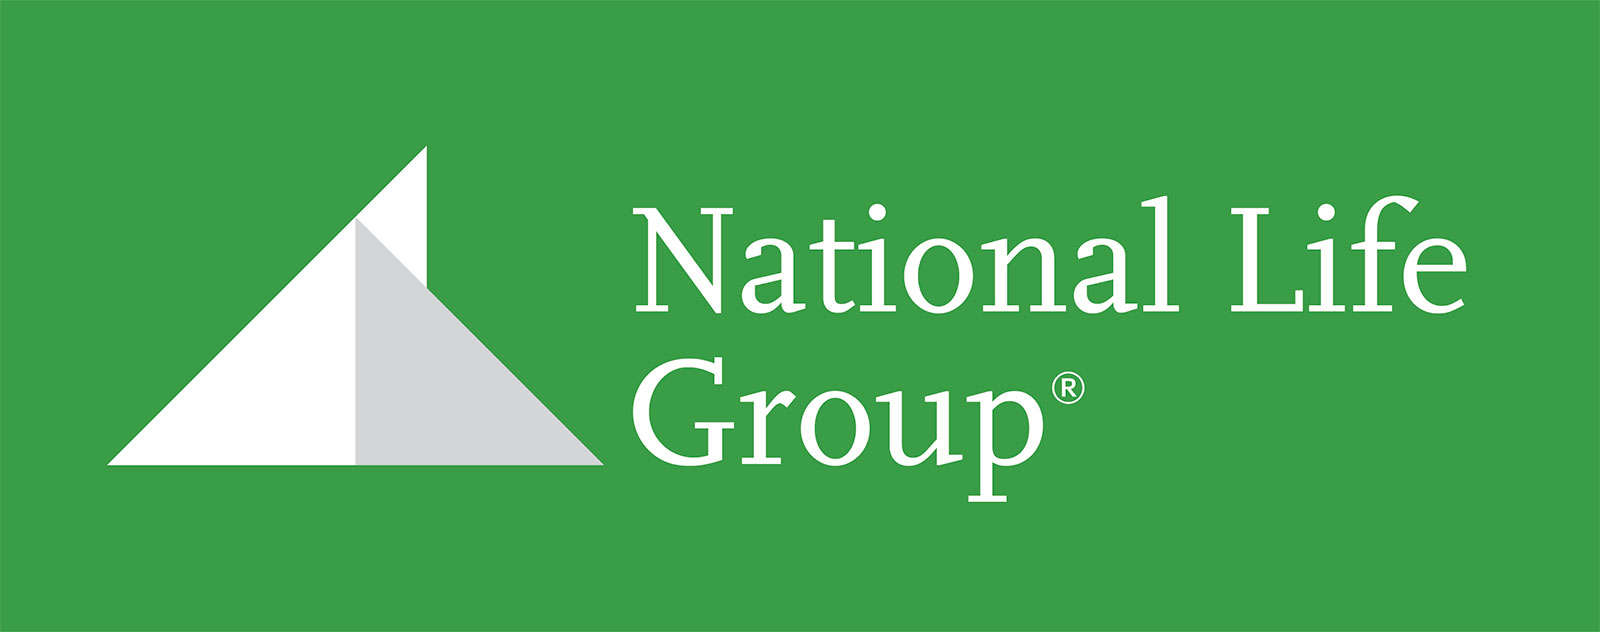 2018_NationalLife-logo-web-KO-ongreen